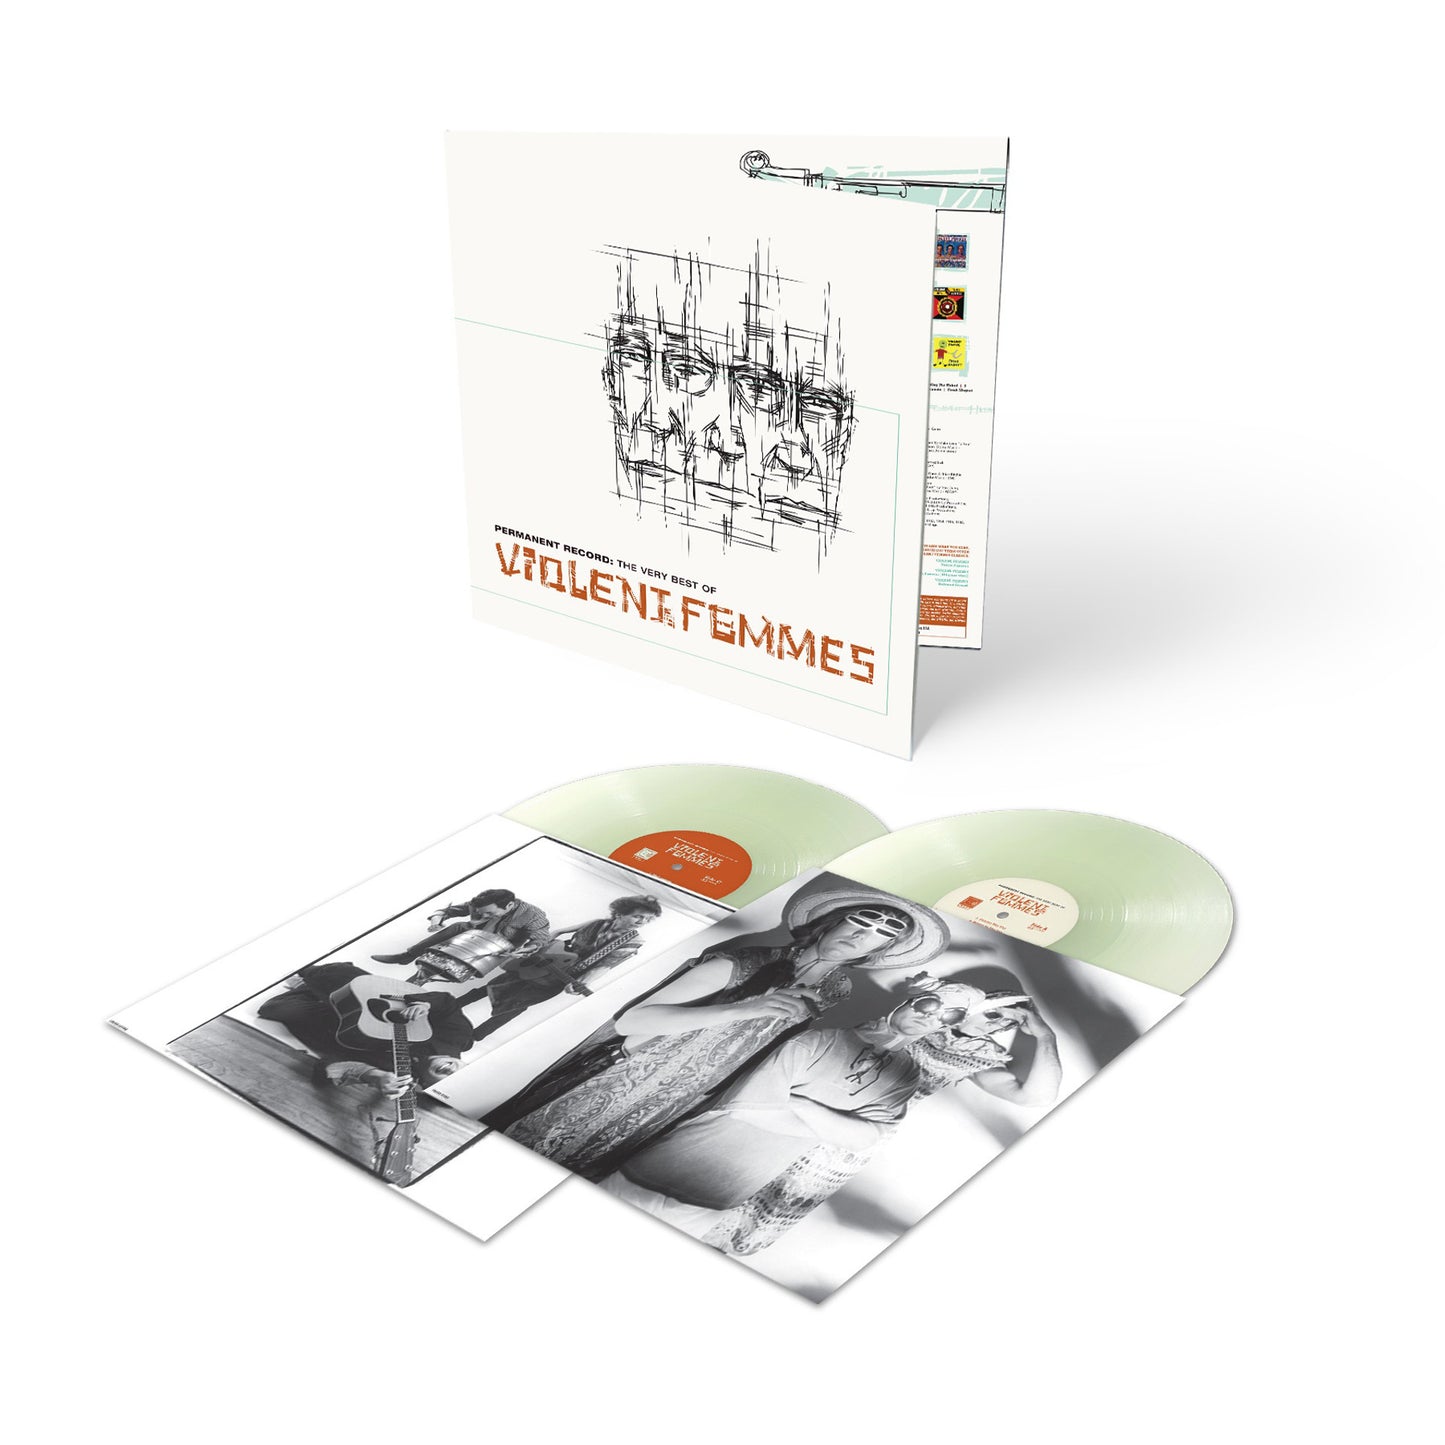 Violent Femmes - Permanent Record: The Very Best of Violent Femmes - LP